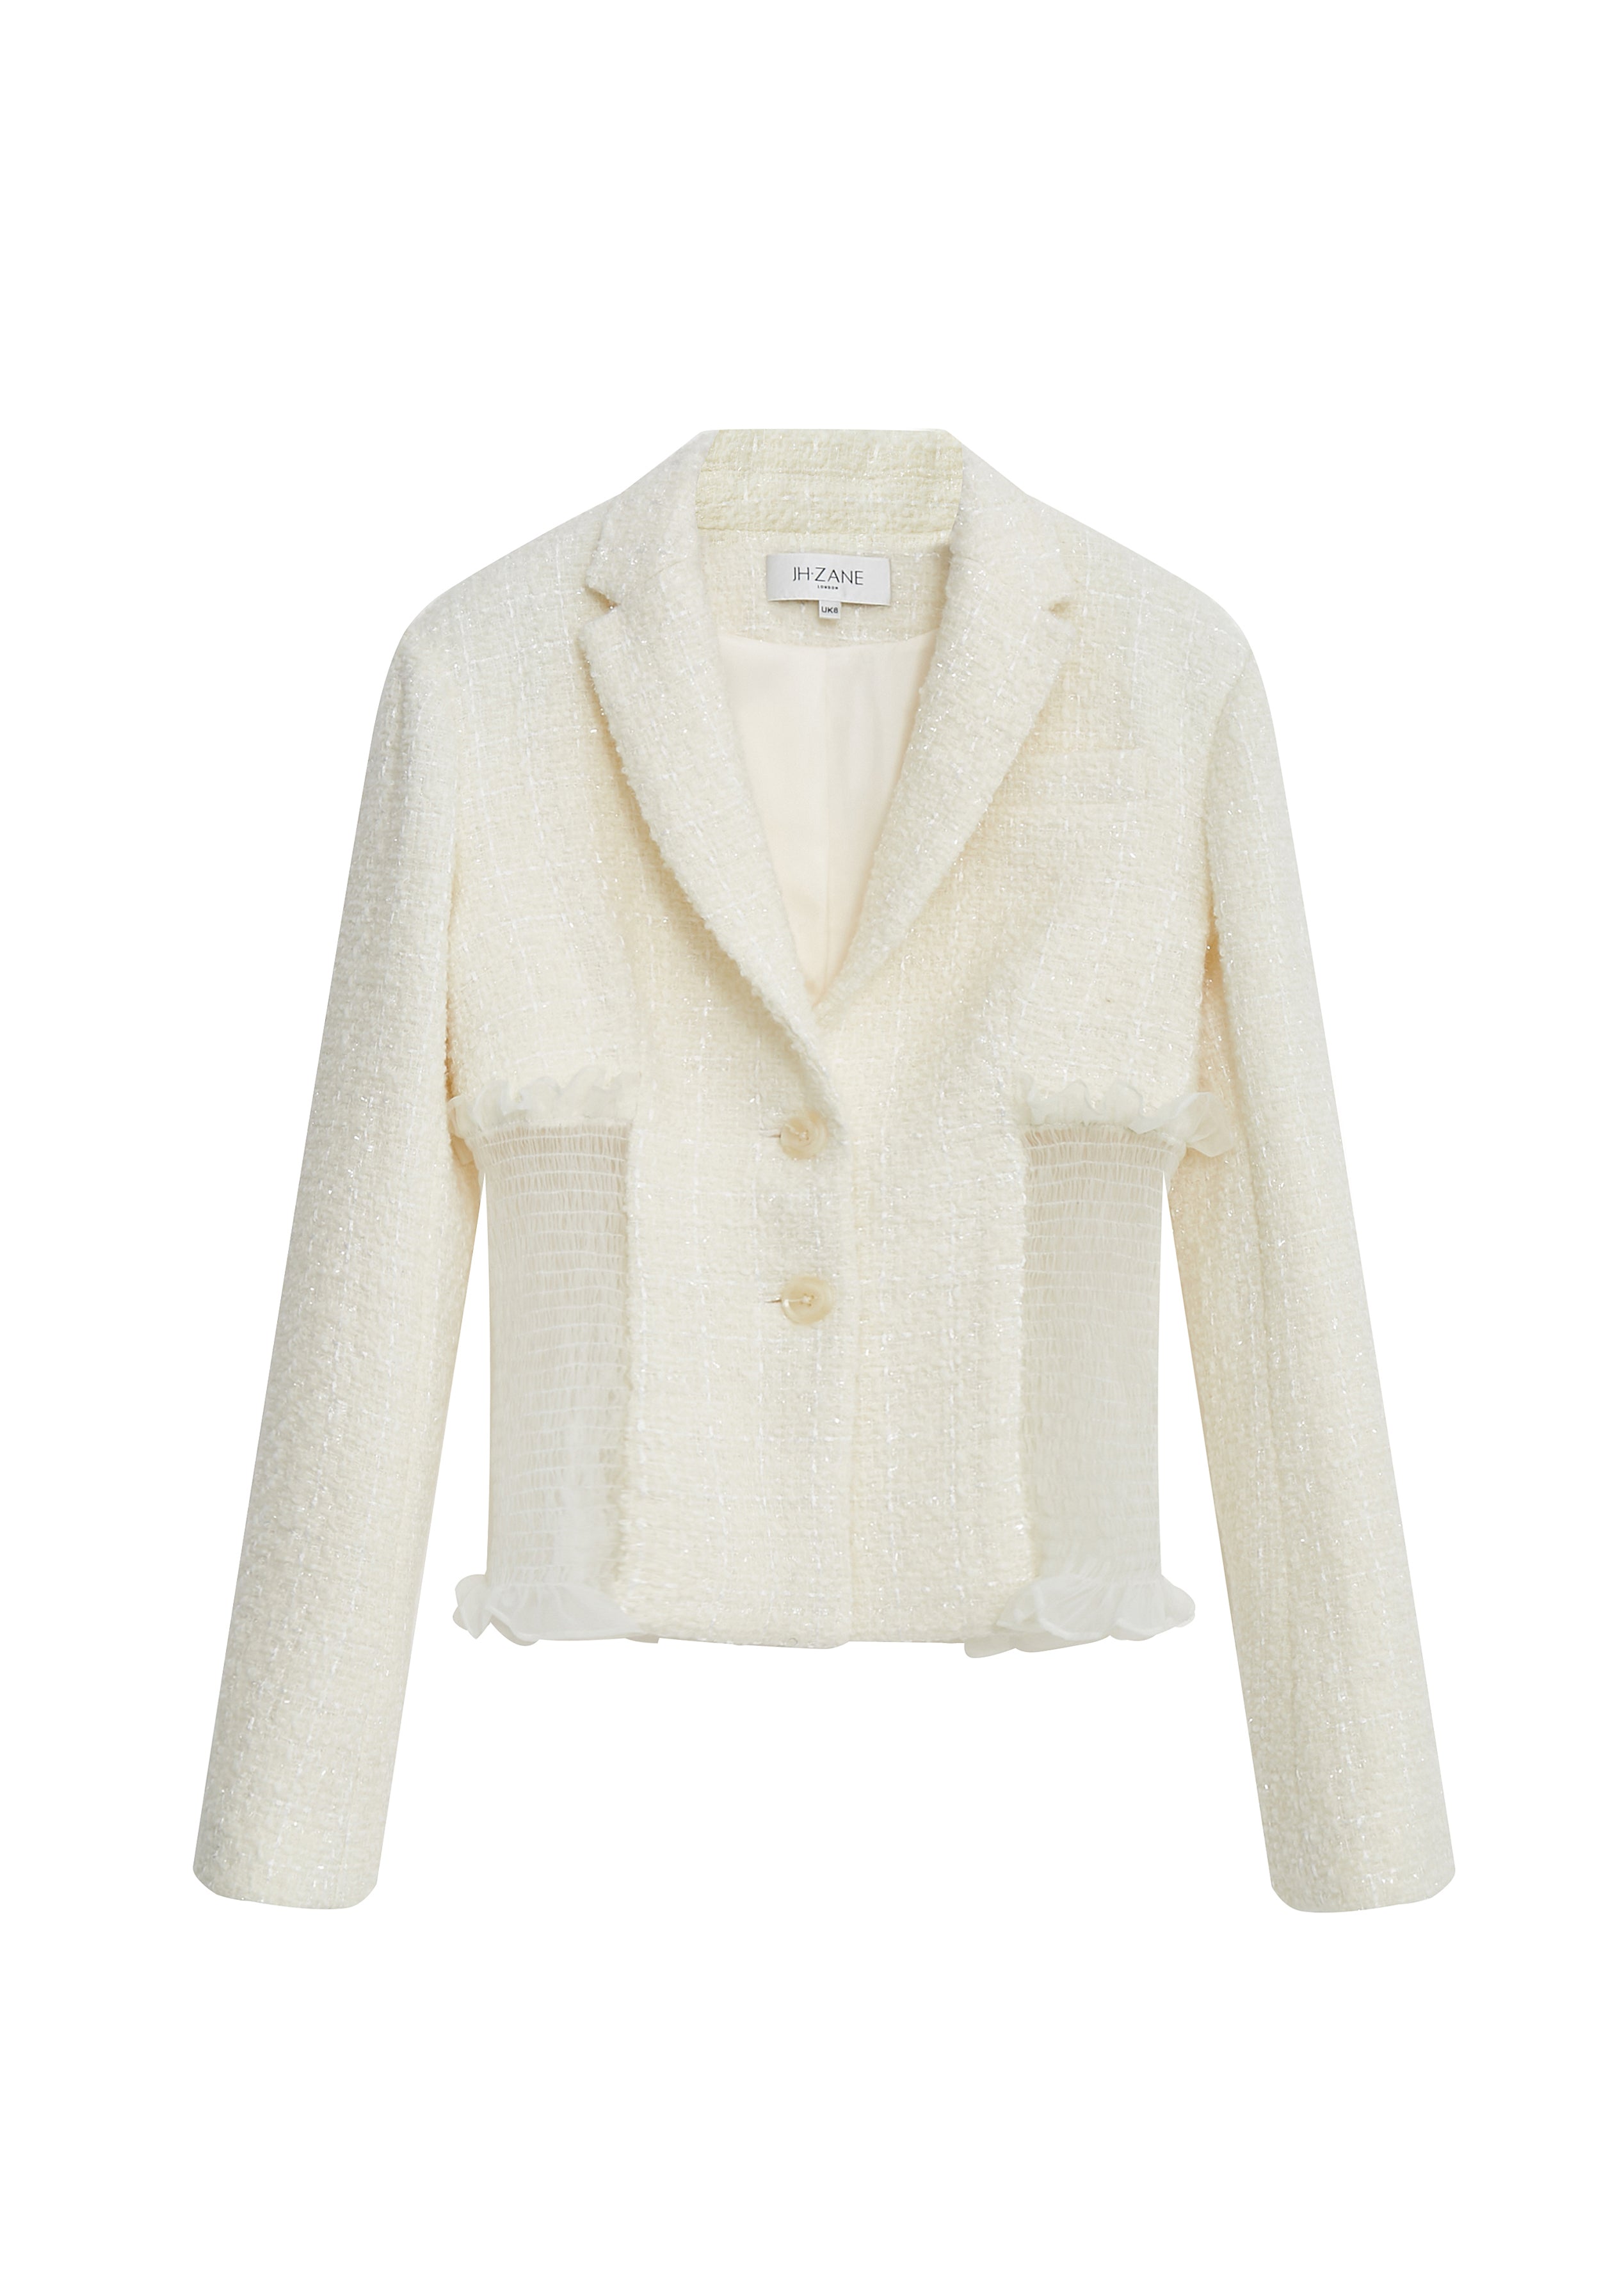 Magnolia Tweed Jacket in White – J H . ZANE